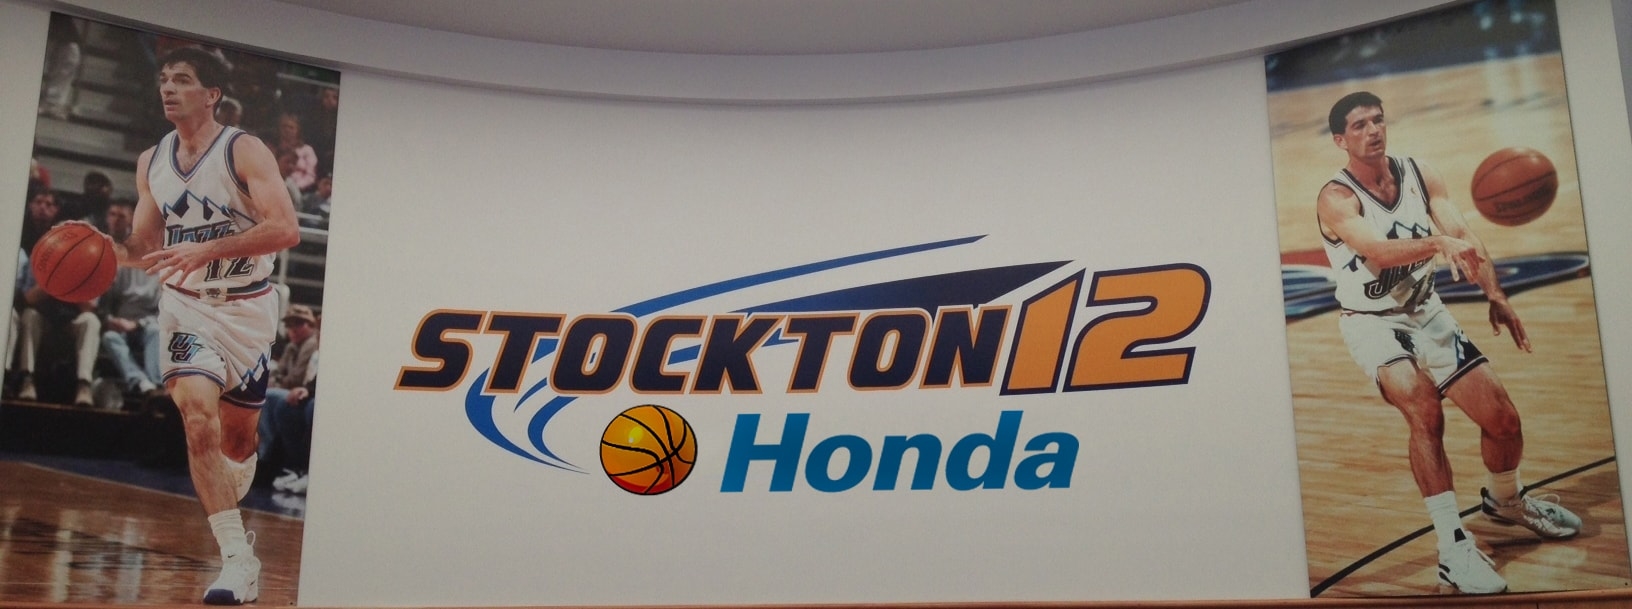 Stockton 12 Honda Sandy UT